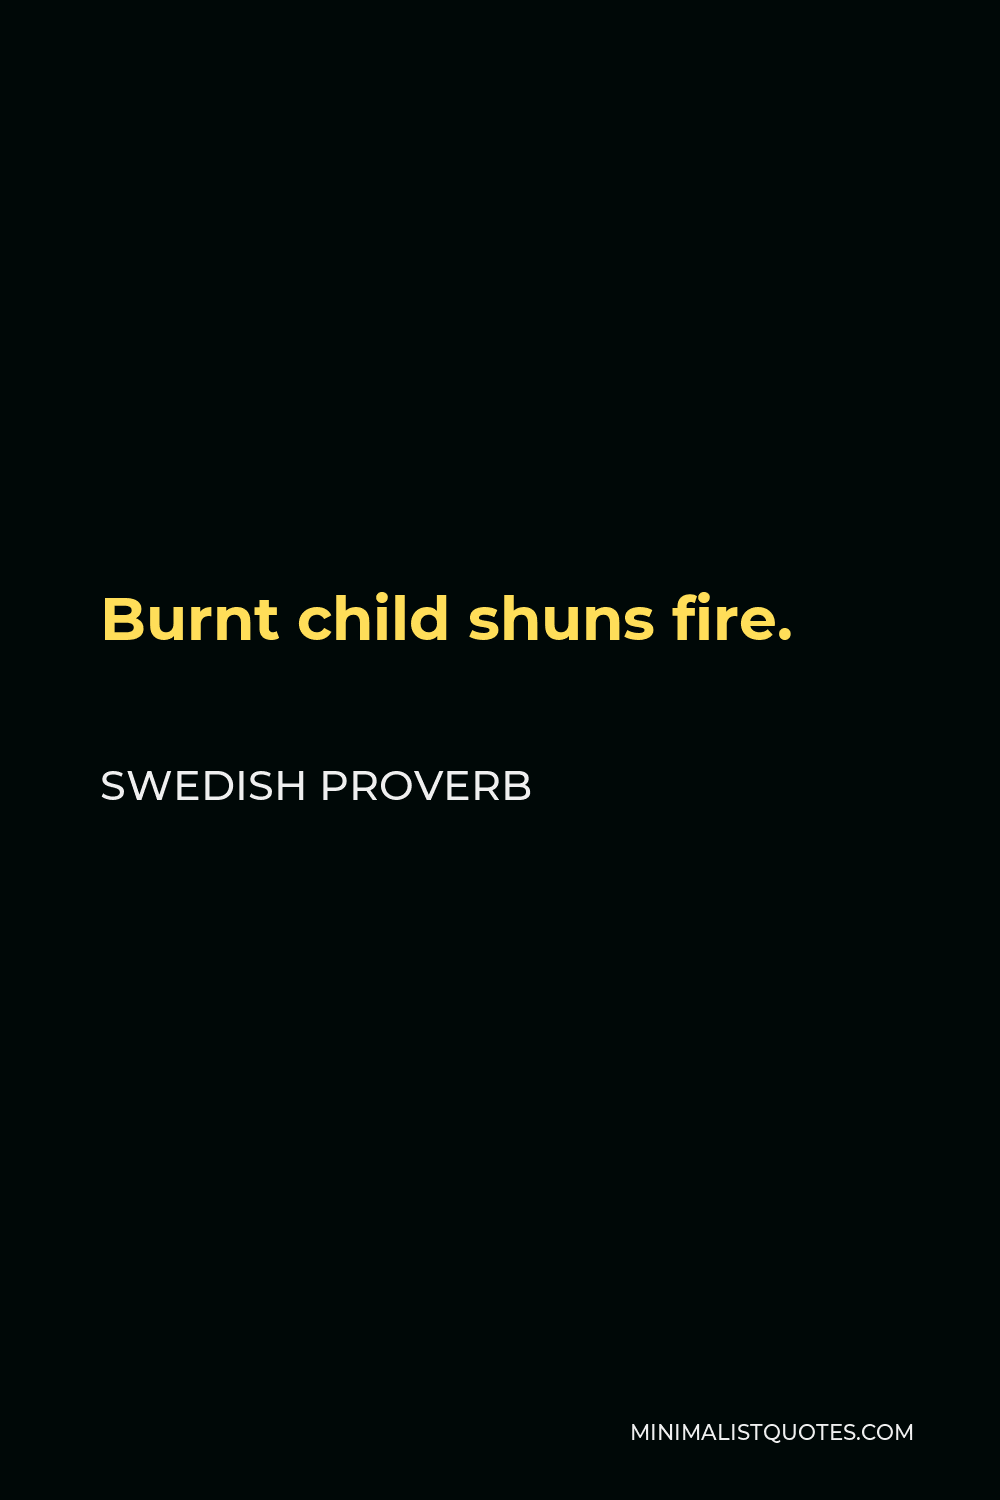 Swedish Proverb Quote - Burnt child shuns fire.